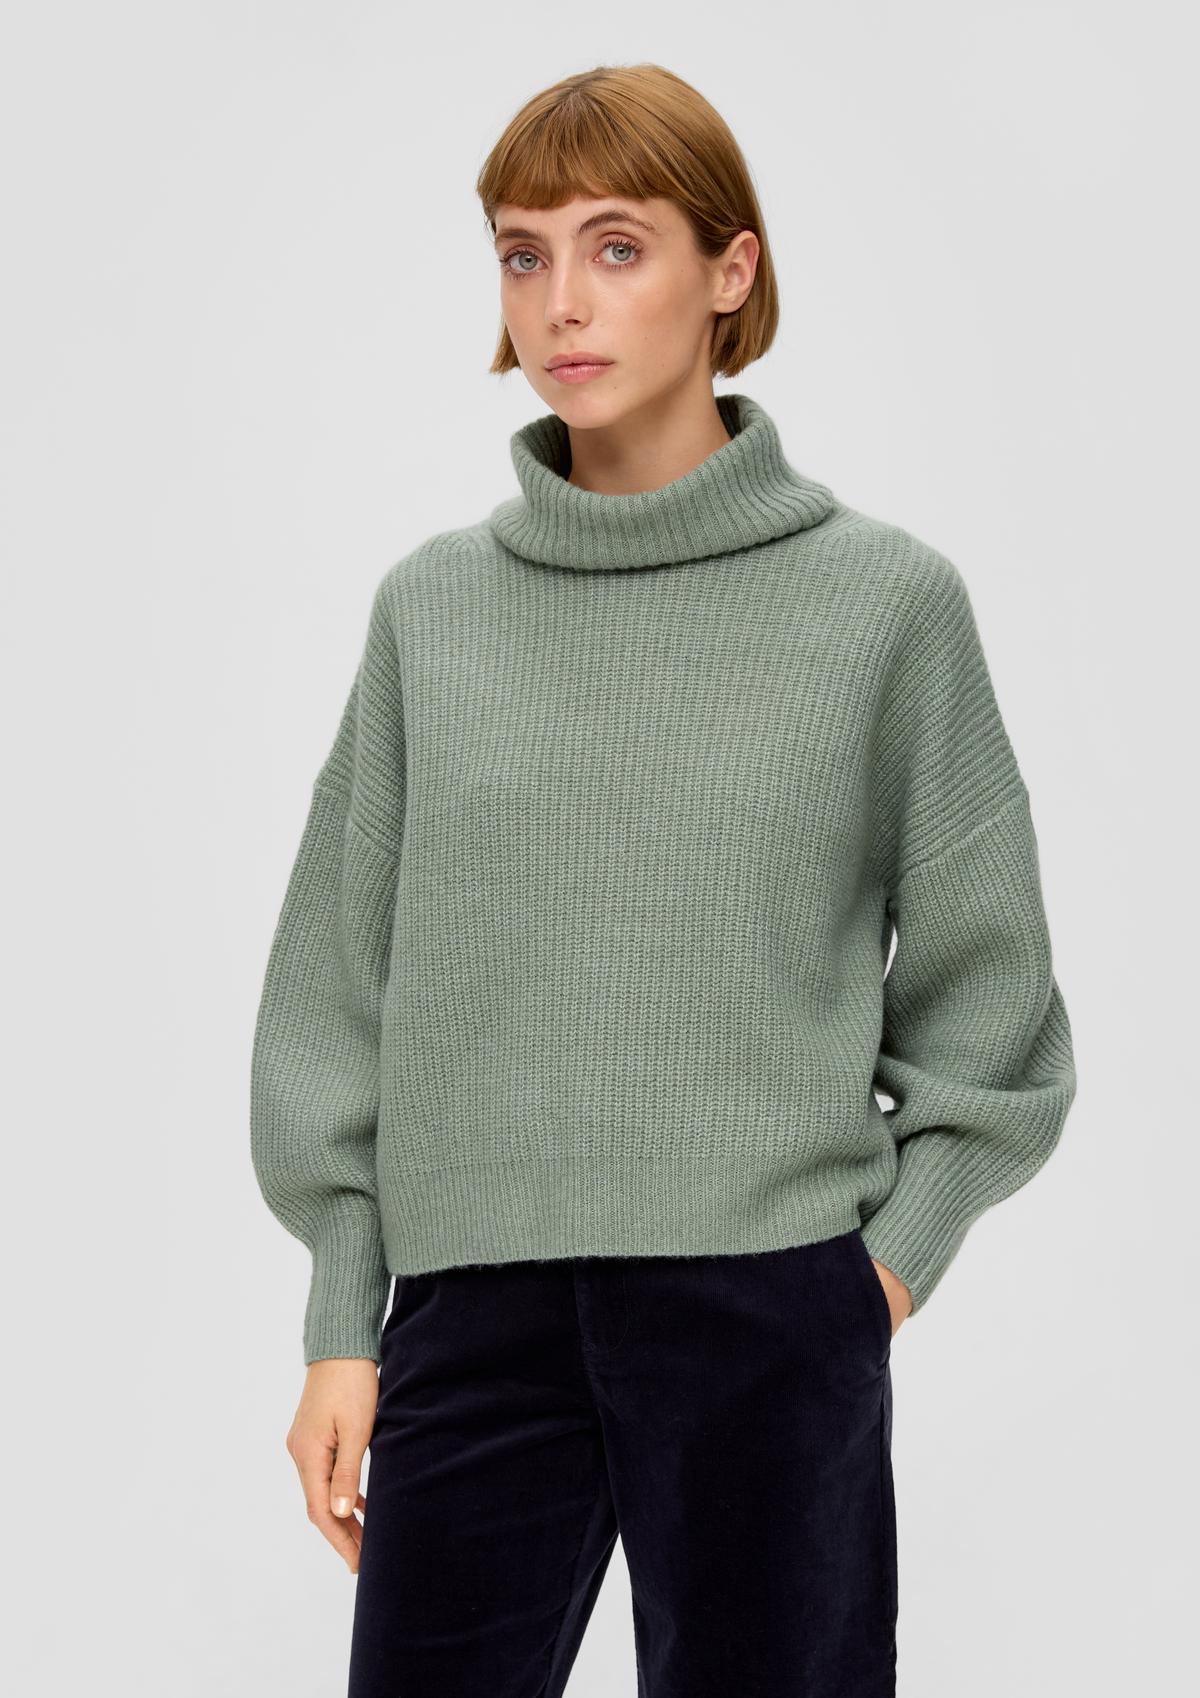 Oversized knitted jumper